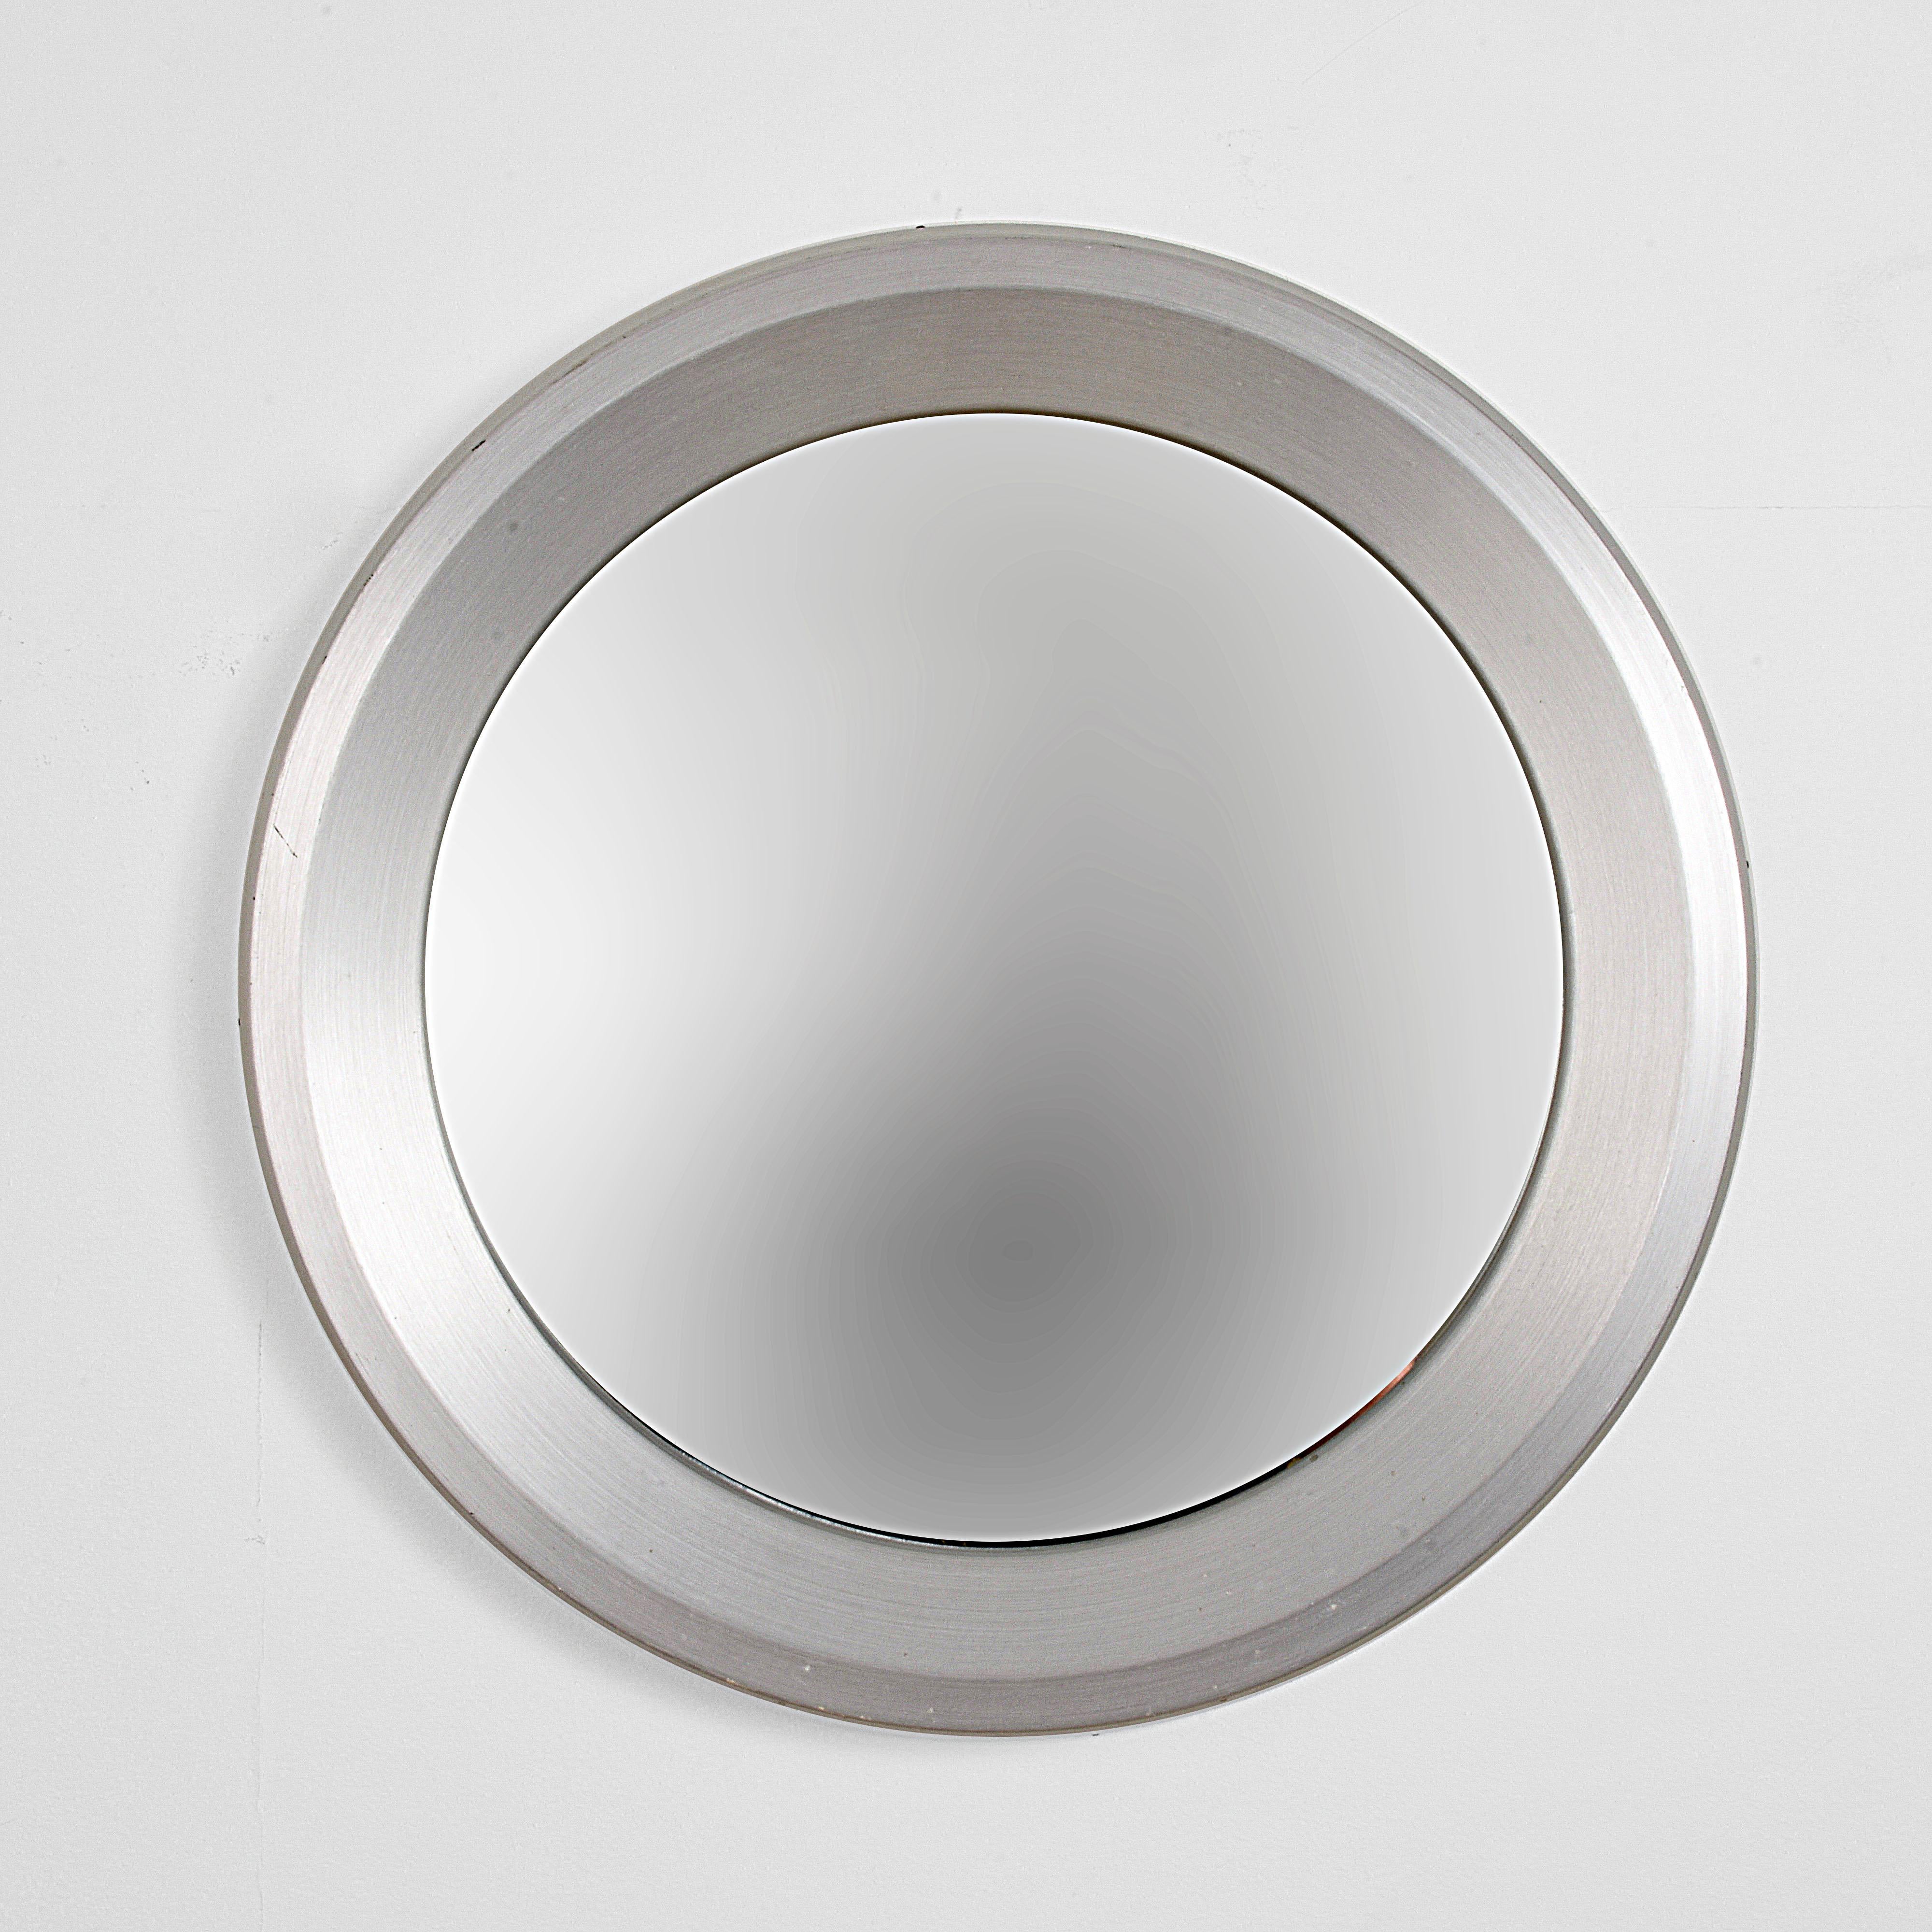 Mid-Century Modern Round Beveled Mirror, Aluminum Frame, 1960s Midcentury, Italy, Artemide Style